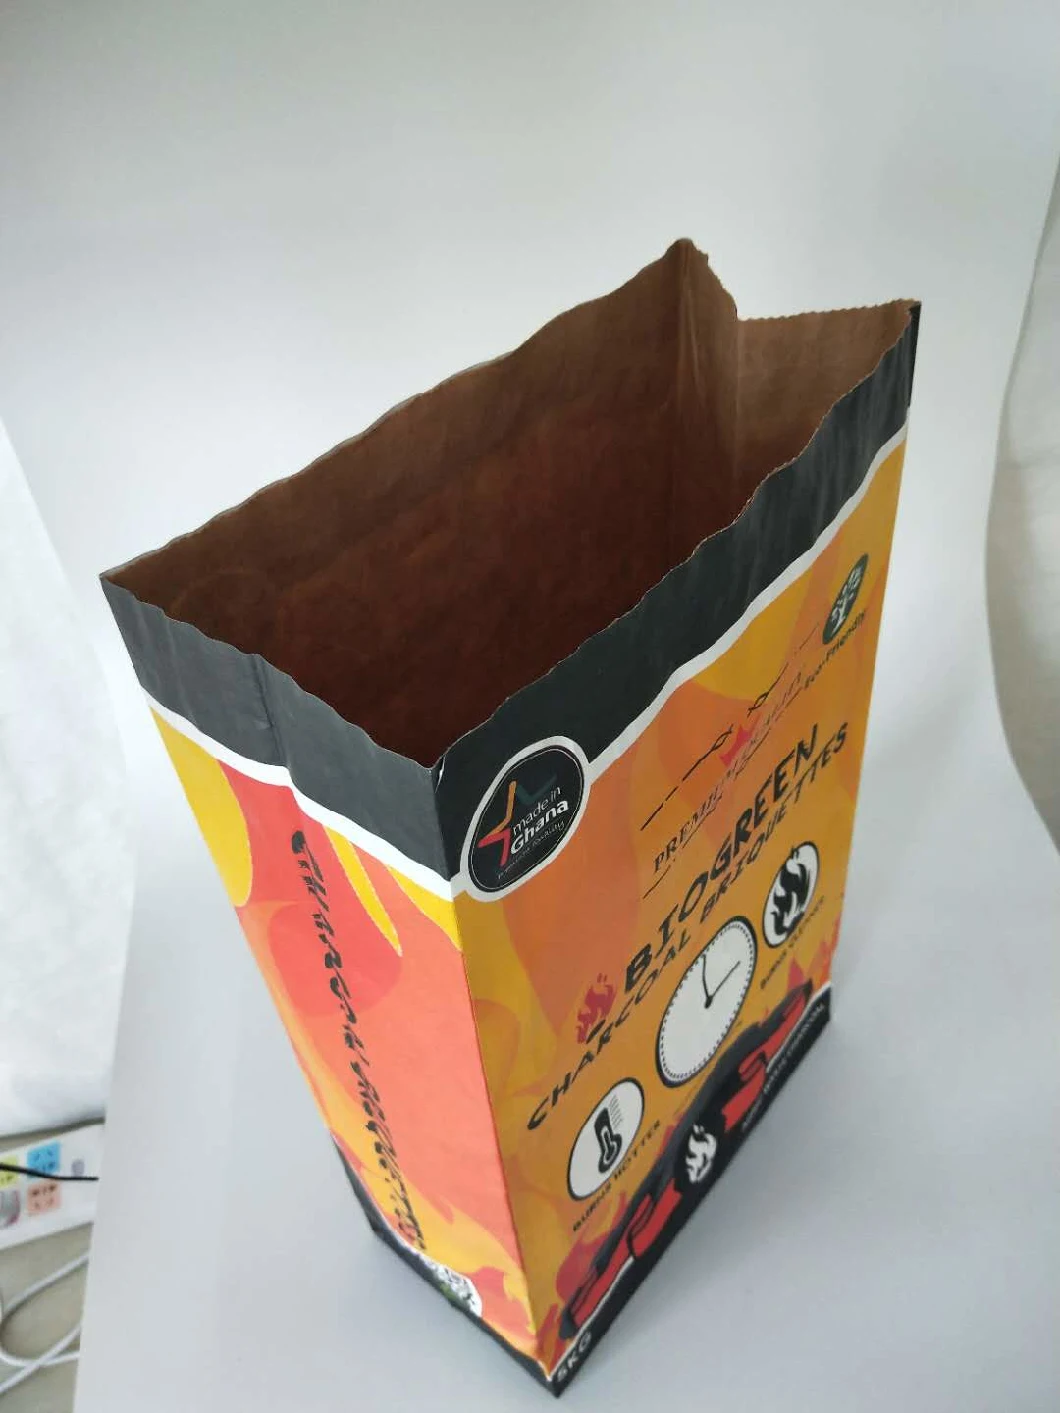 5kg Nutural Hardwood Lump Charcoal Paper Bags